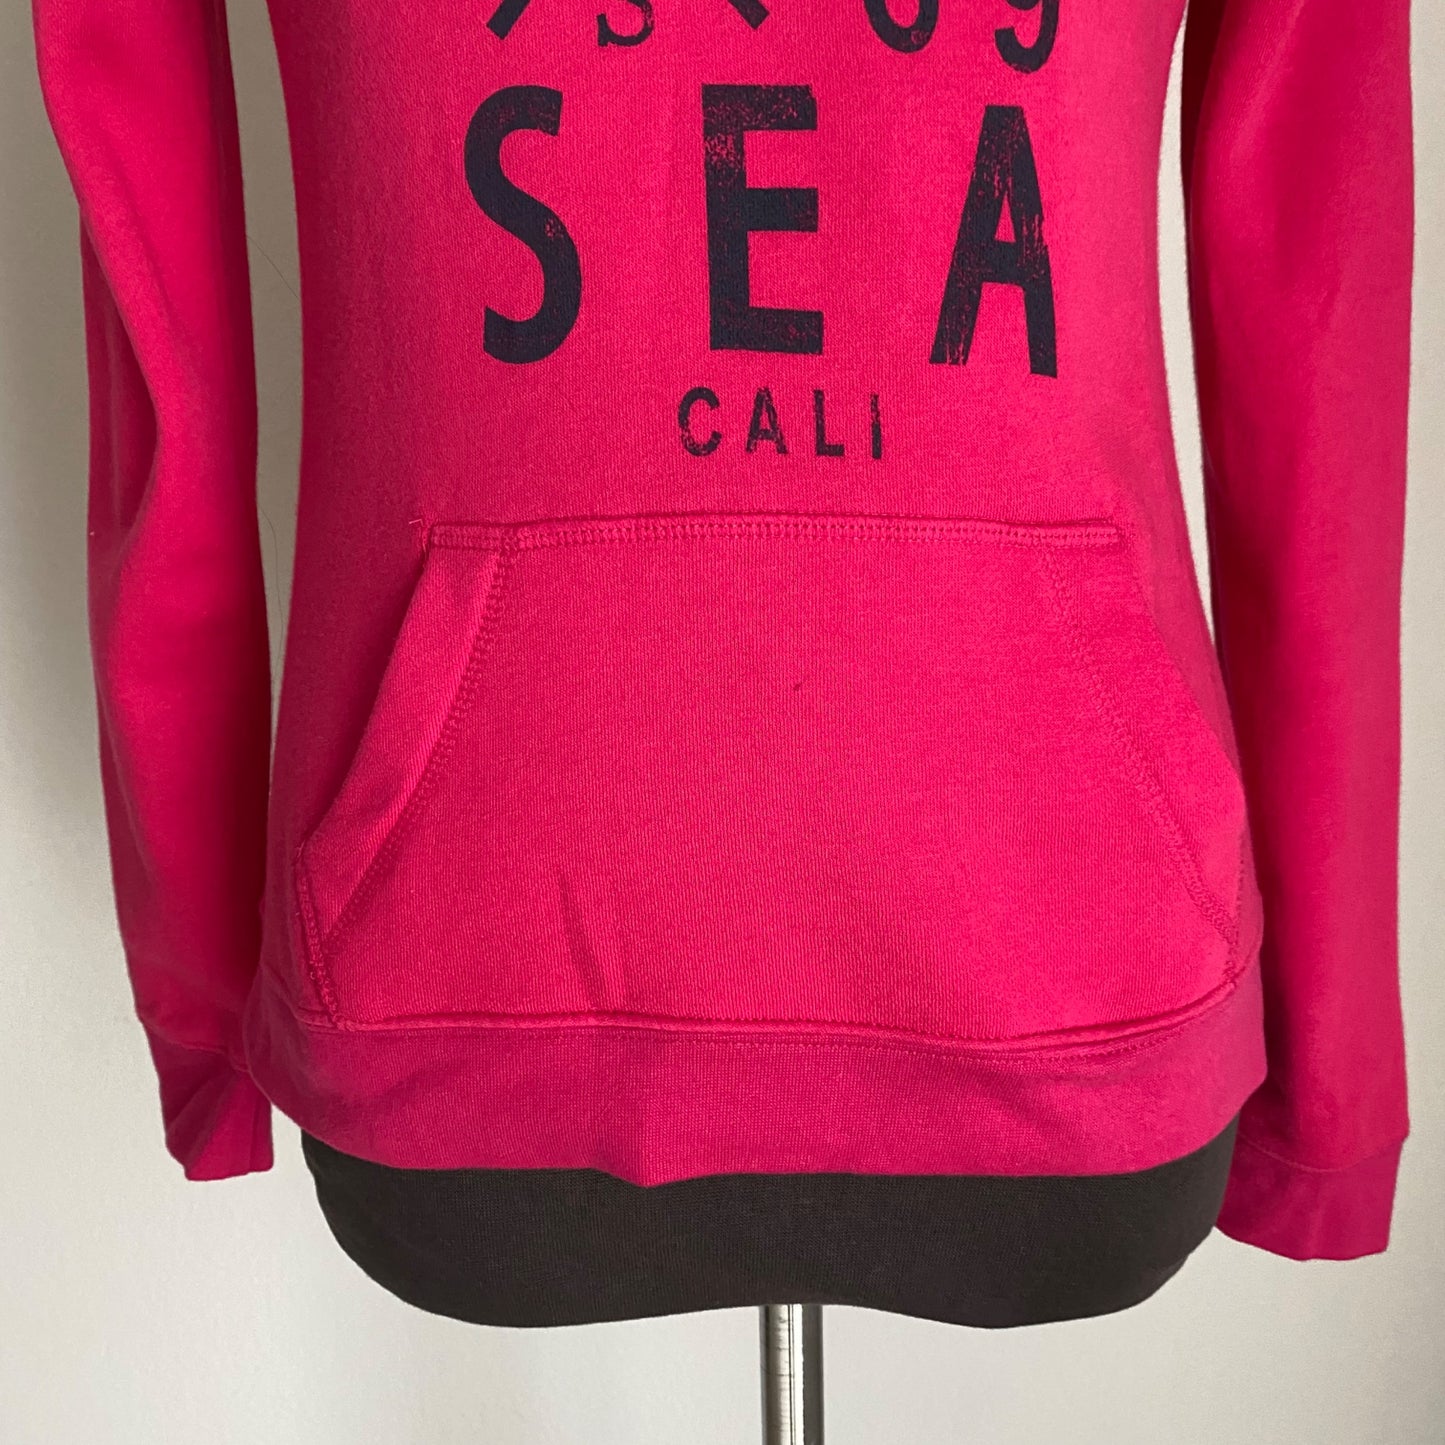 Gap sz XS Long sleeve hooded cotton V neck SUN SEA CALI sweatshirt